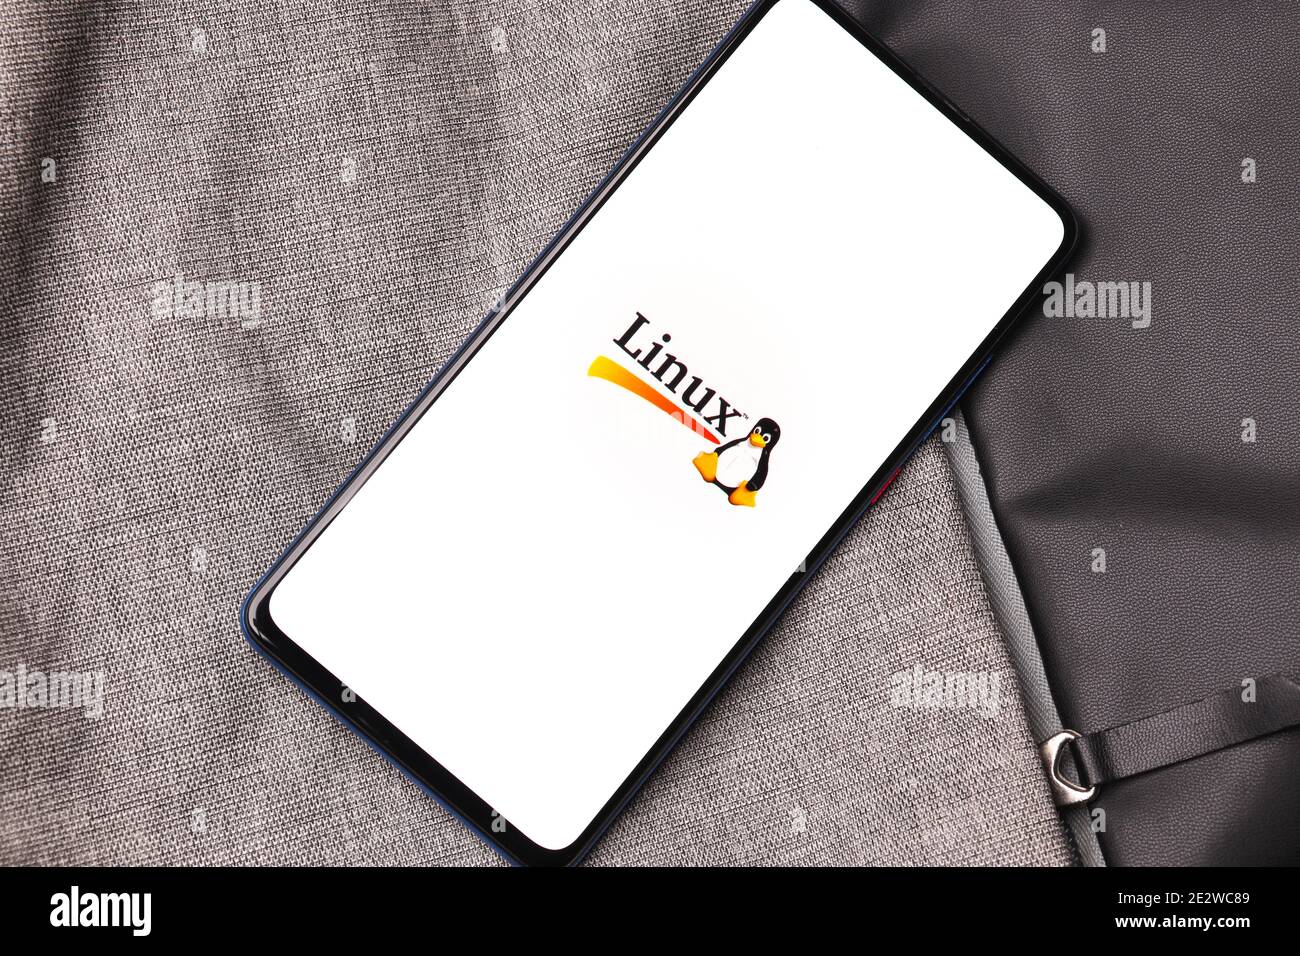 Assam, indien - Januar 15, 2020 : Linux-Logo auf Telefon Bildschirm Stock Bild. Stockfoto